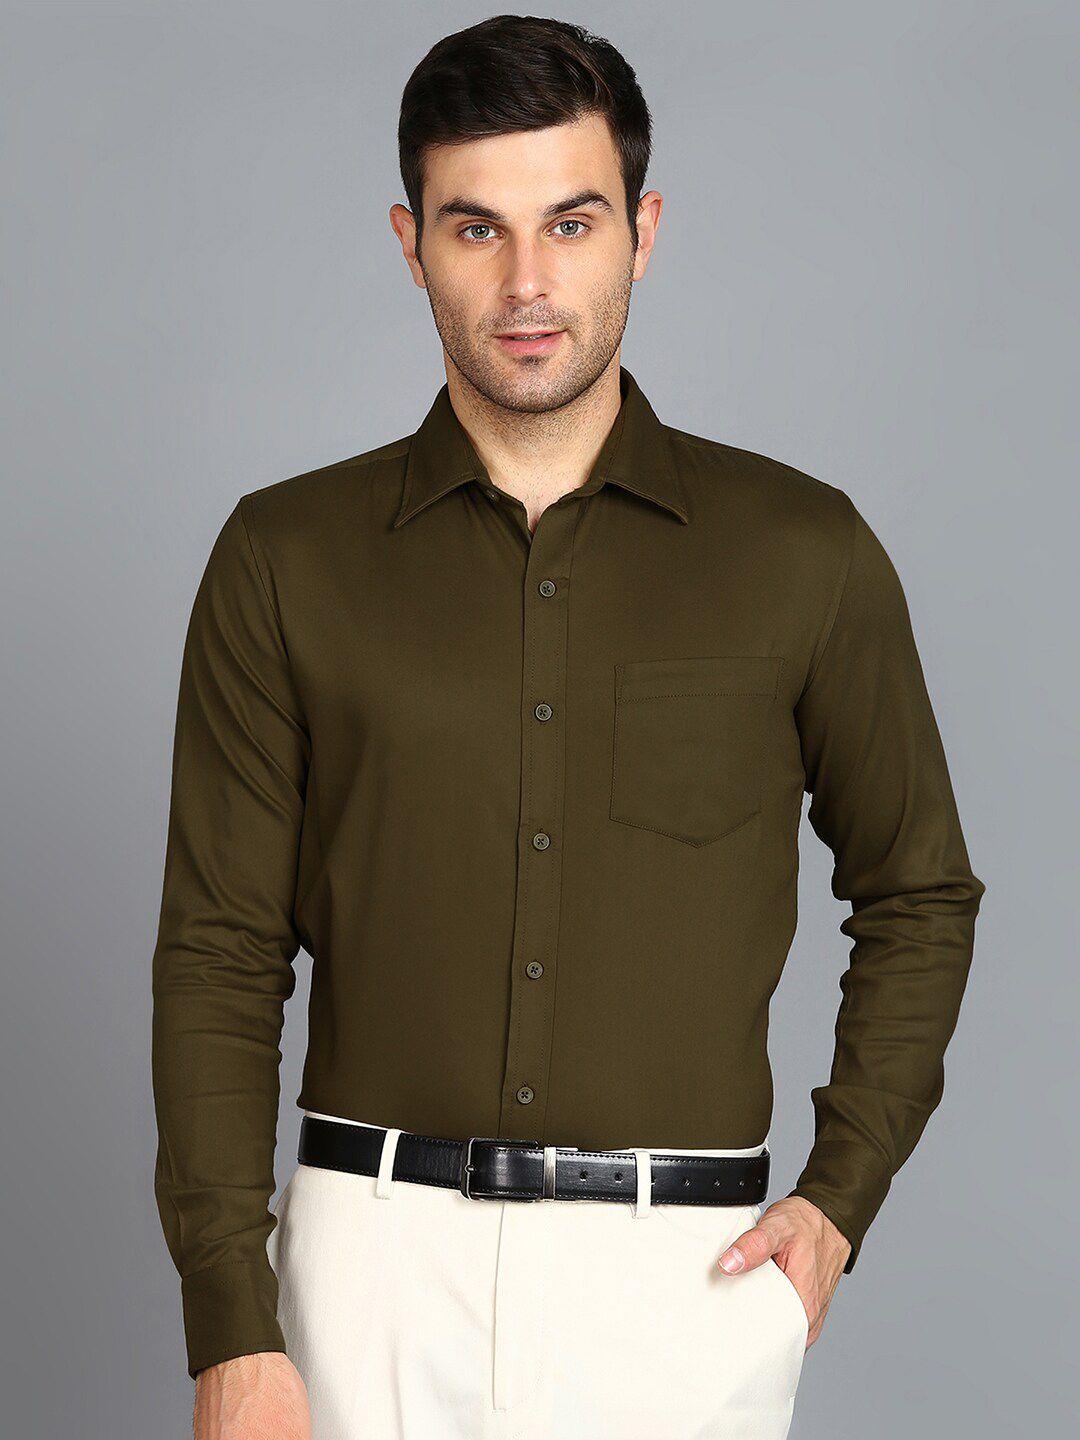 znx clothing men olive green premium opaque formal shirt